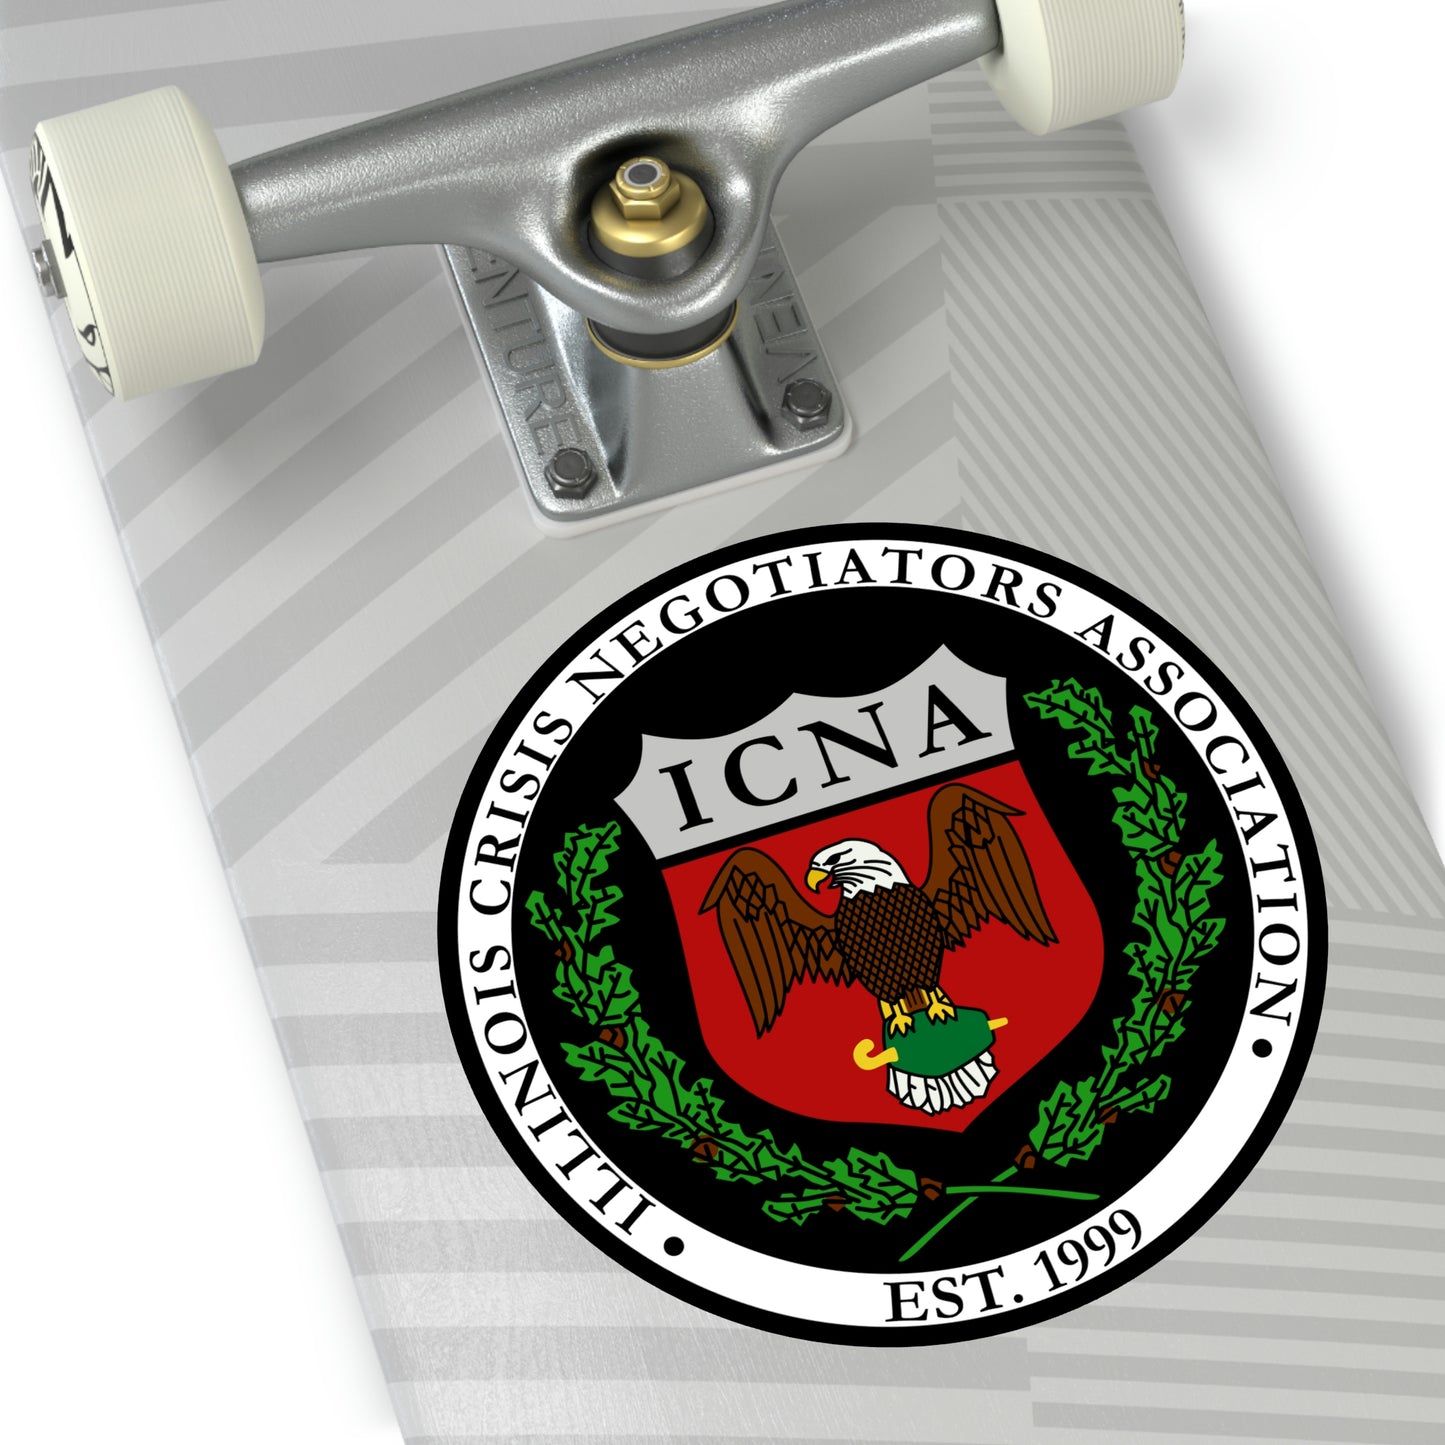 ICNA Stickers